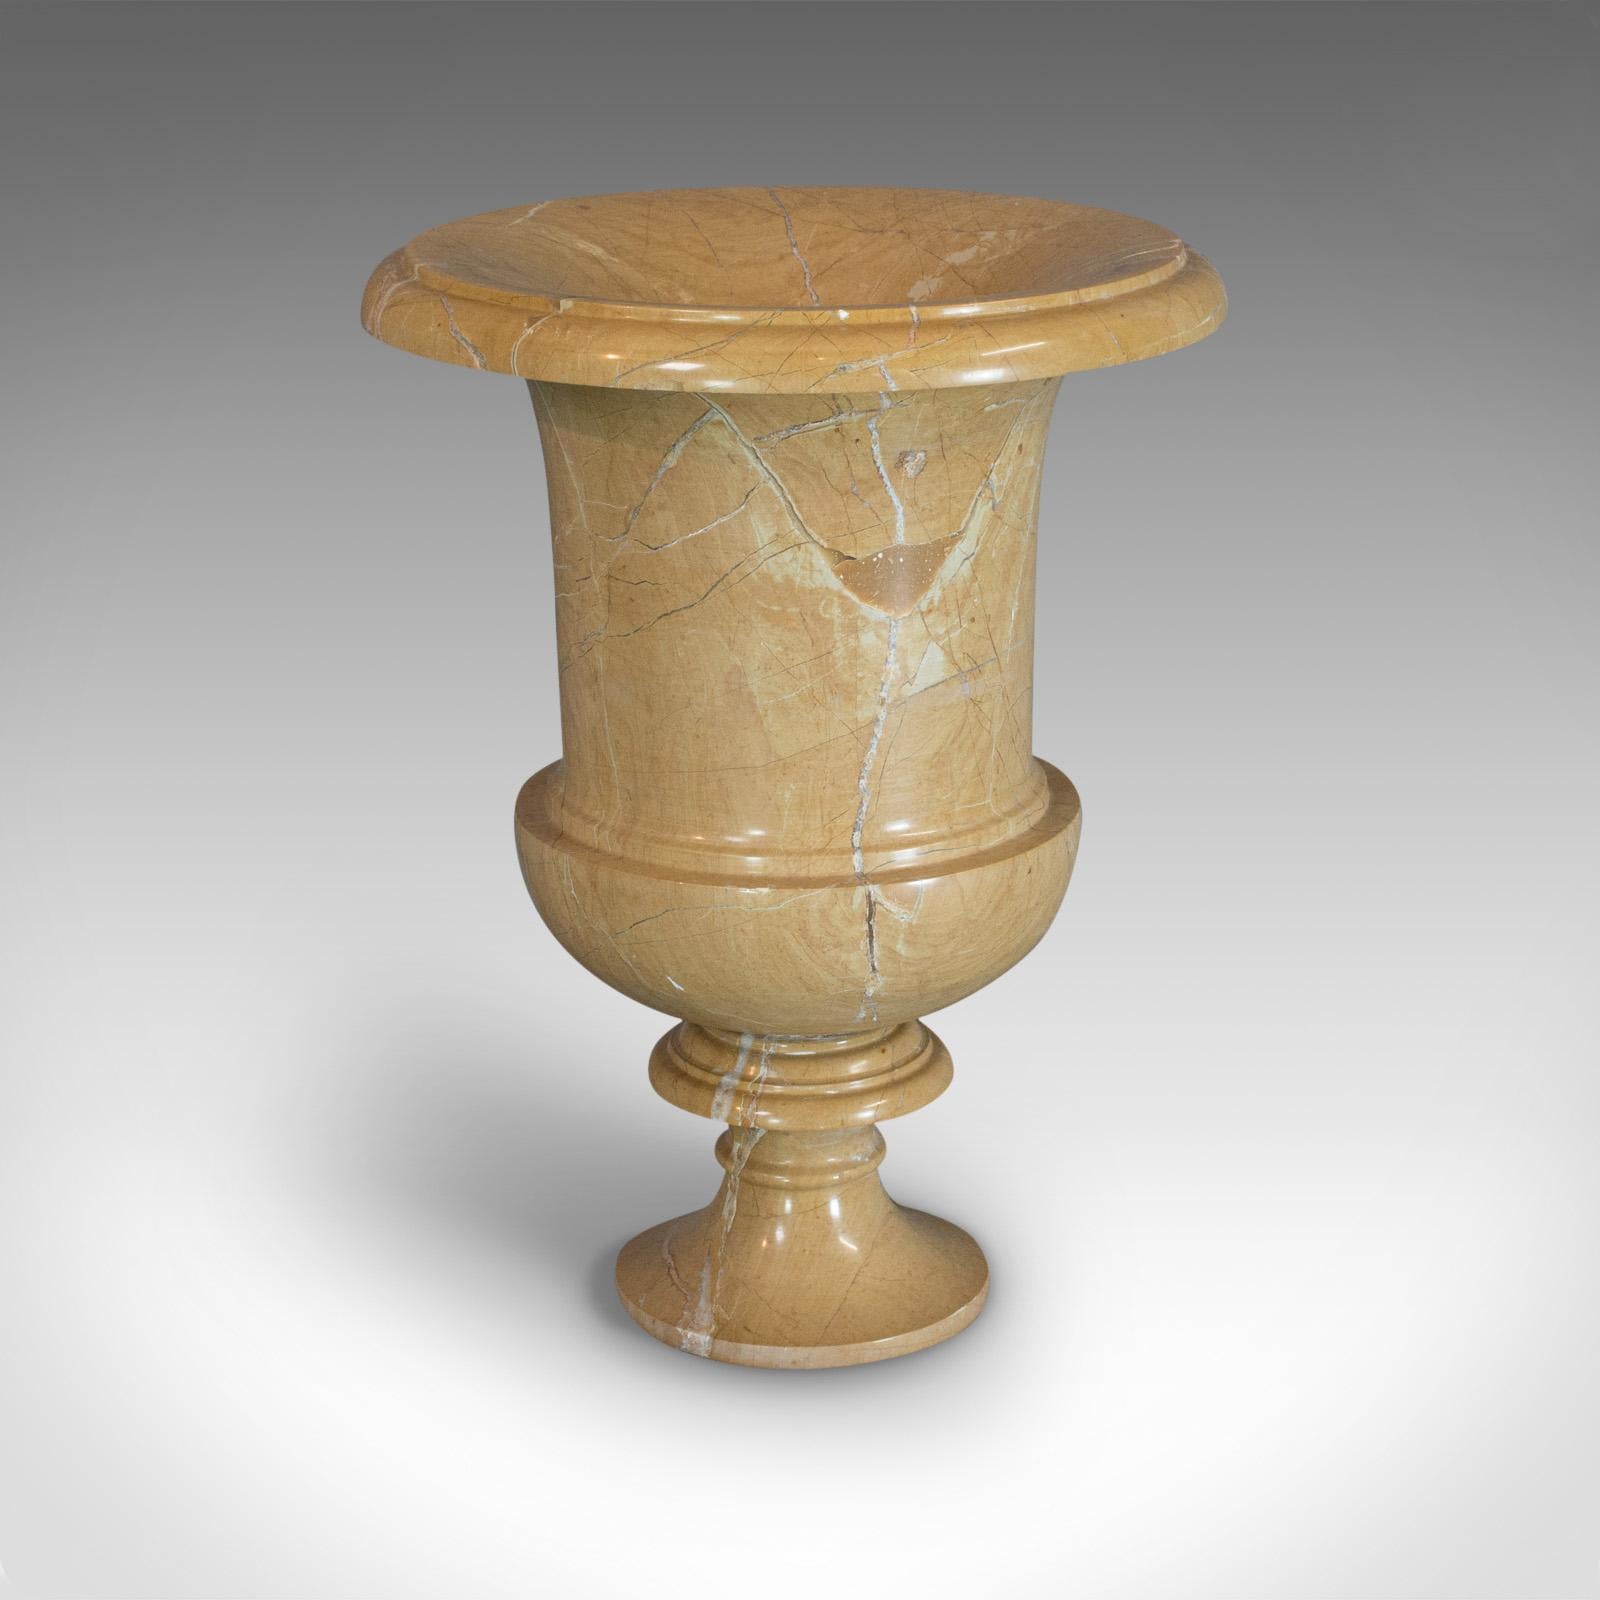 20th Century Vintage Ornamental Baluster Urn, English, Golden Pearl Marble, Decorative, Vase For Sale